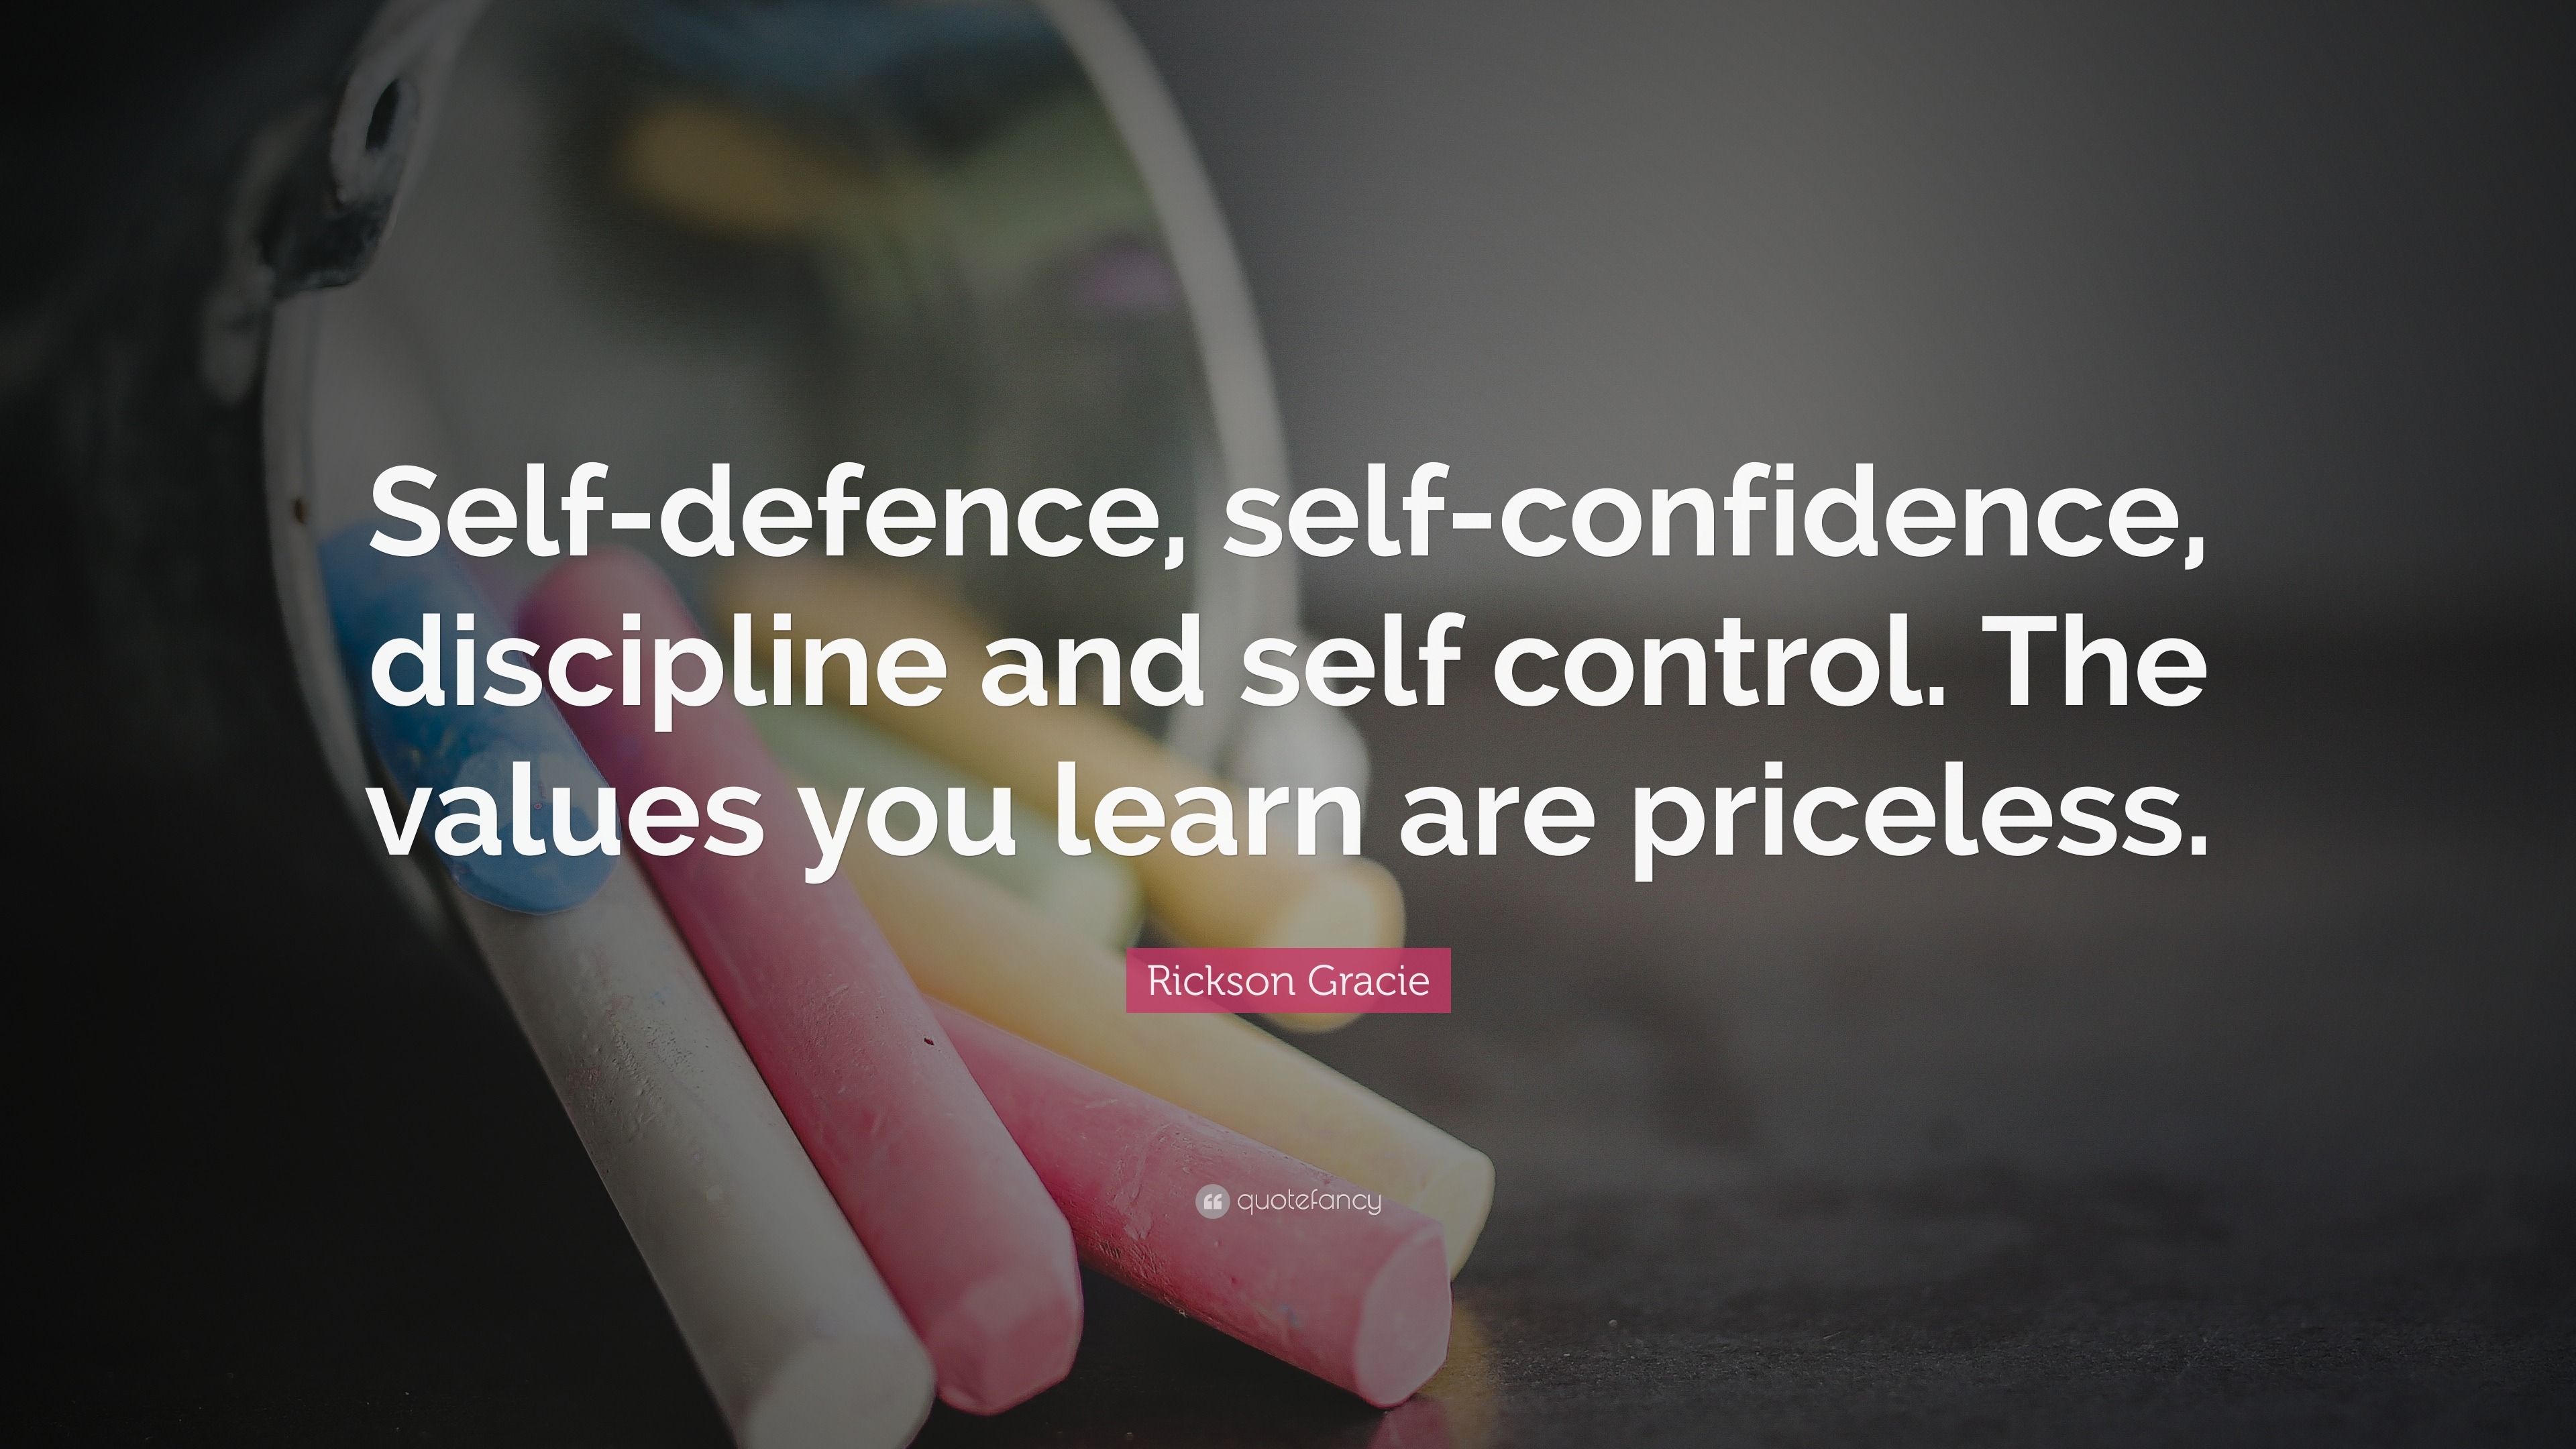 Rickson Gracie Quote: “Self-defence, self-confidence, discipline